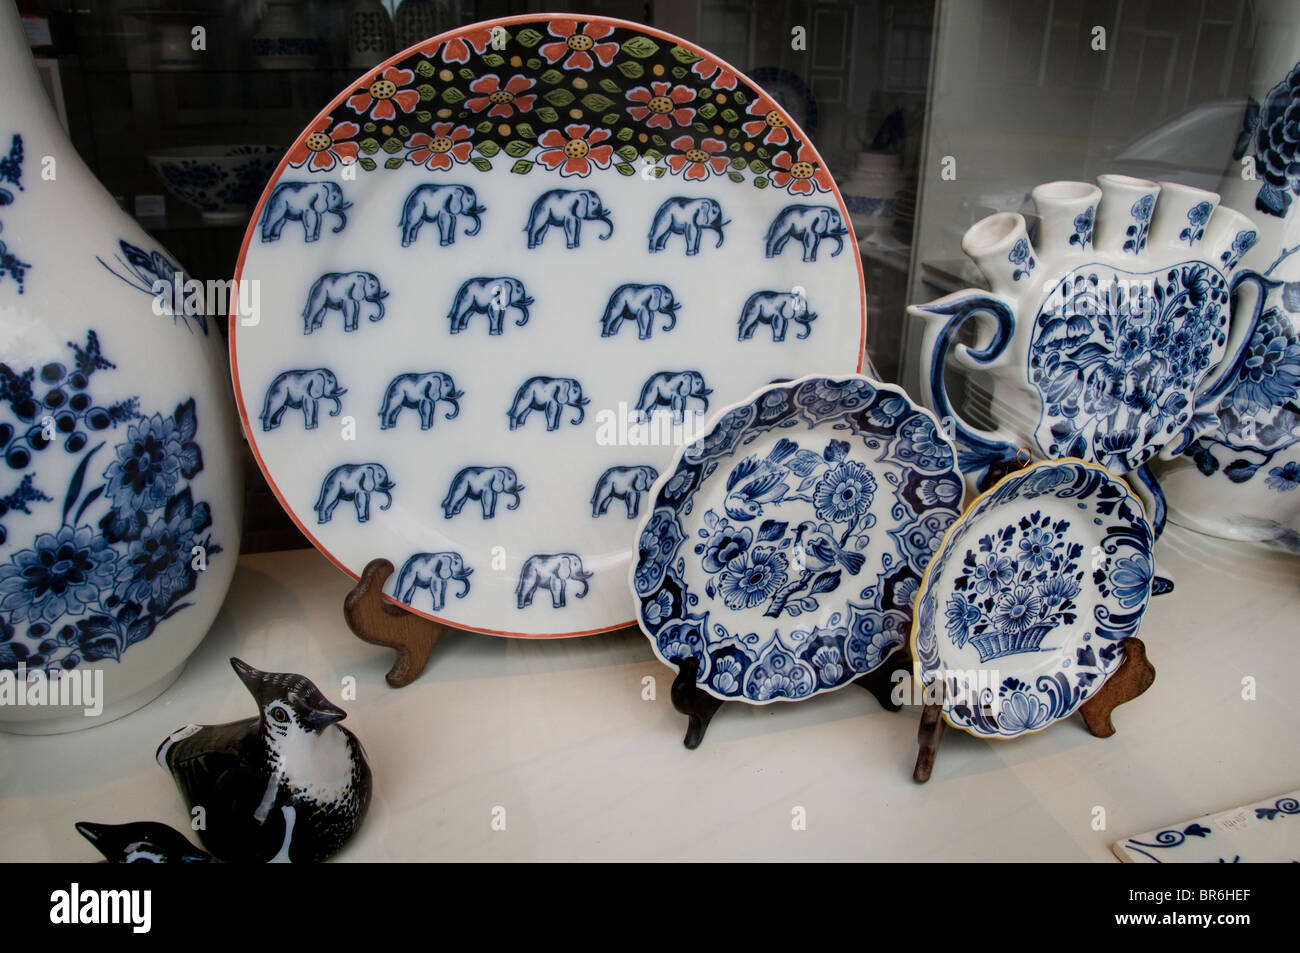 Workum Frisia Paesi Bassi di ceramica piastra di terracotta Foto Stock